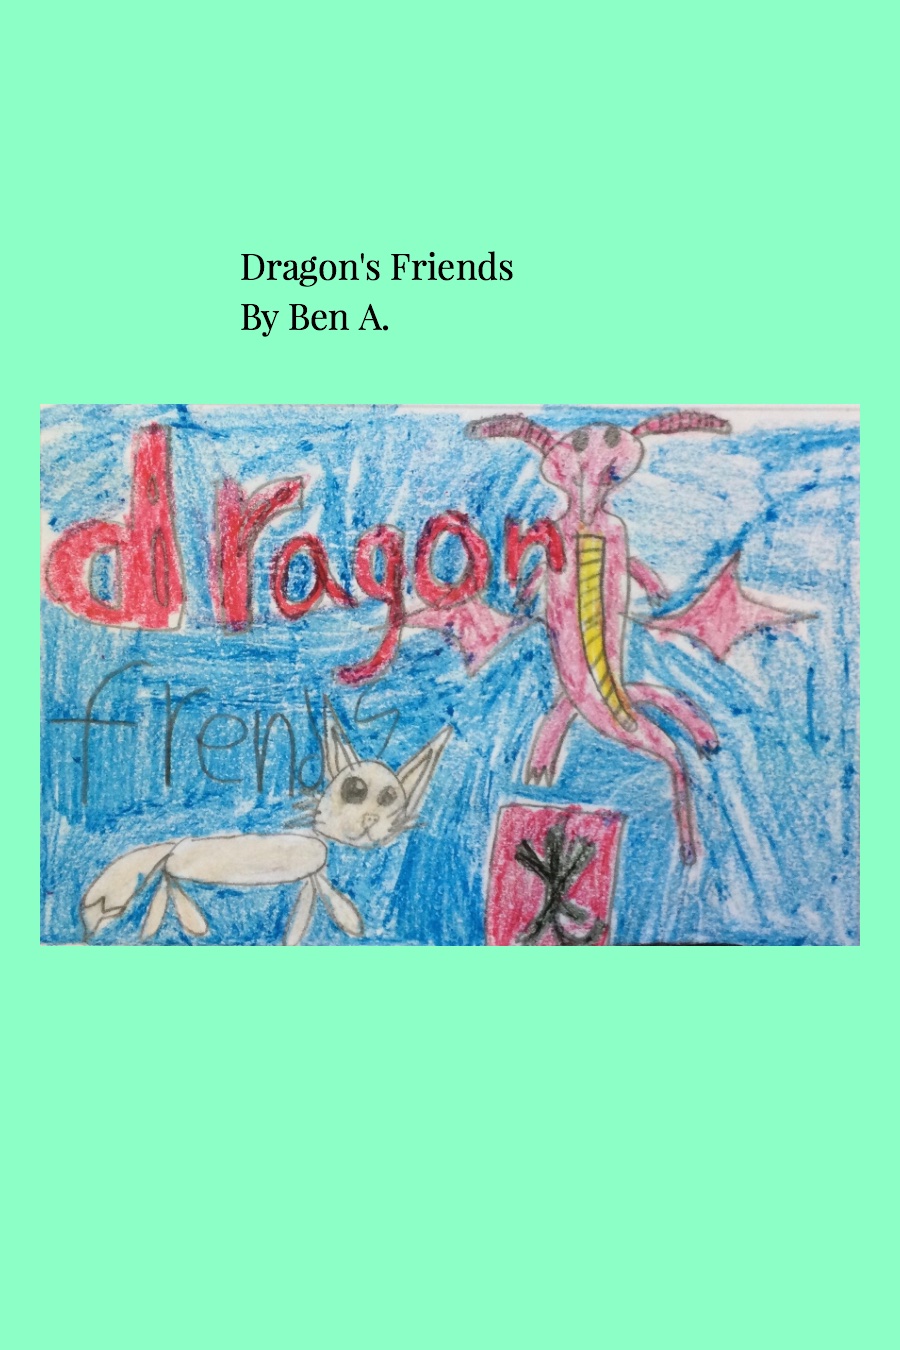 Dragons Friends by Ben A